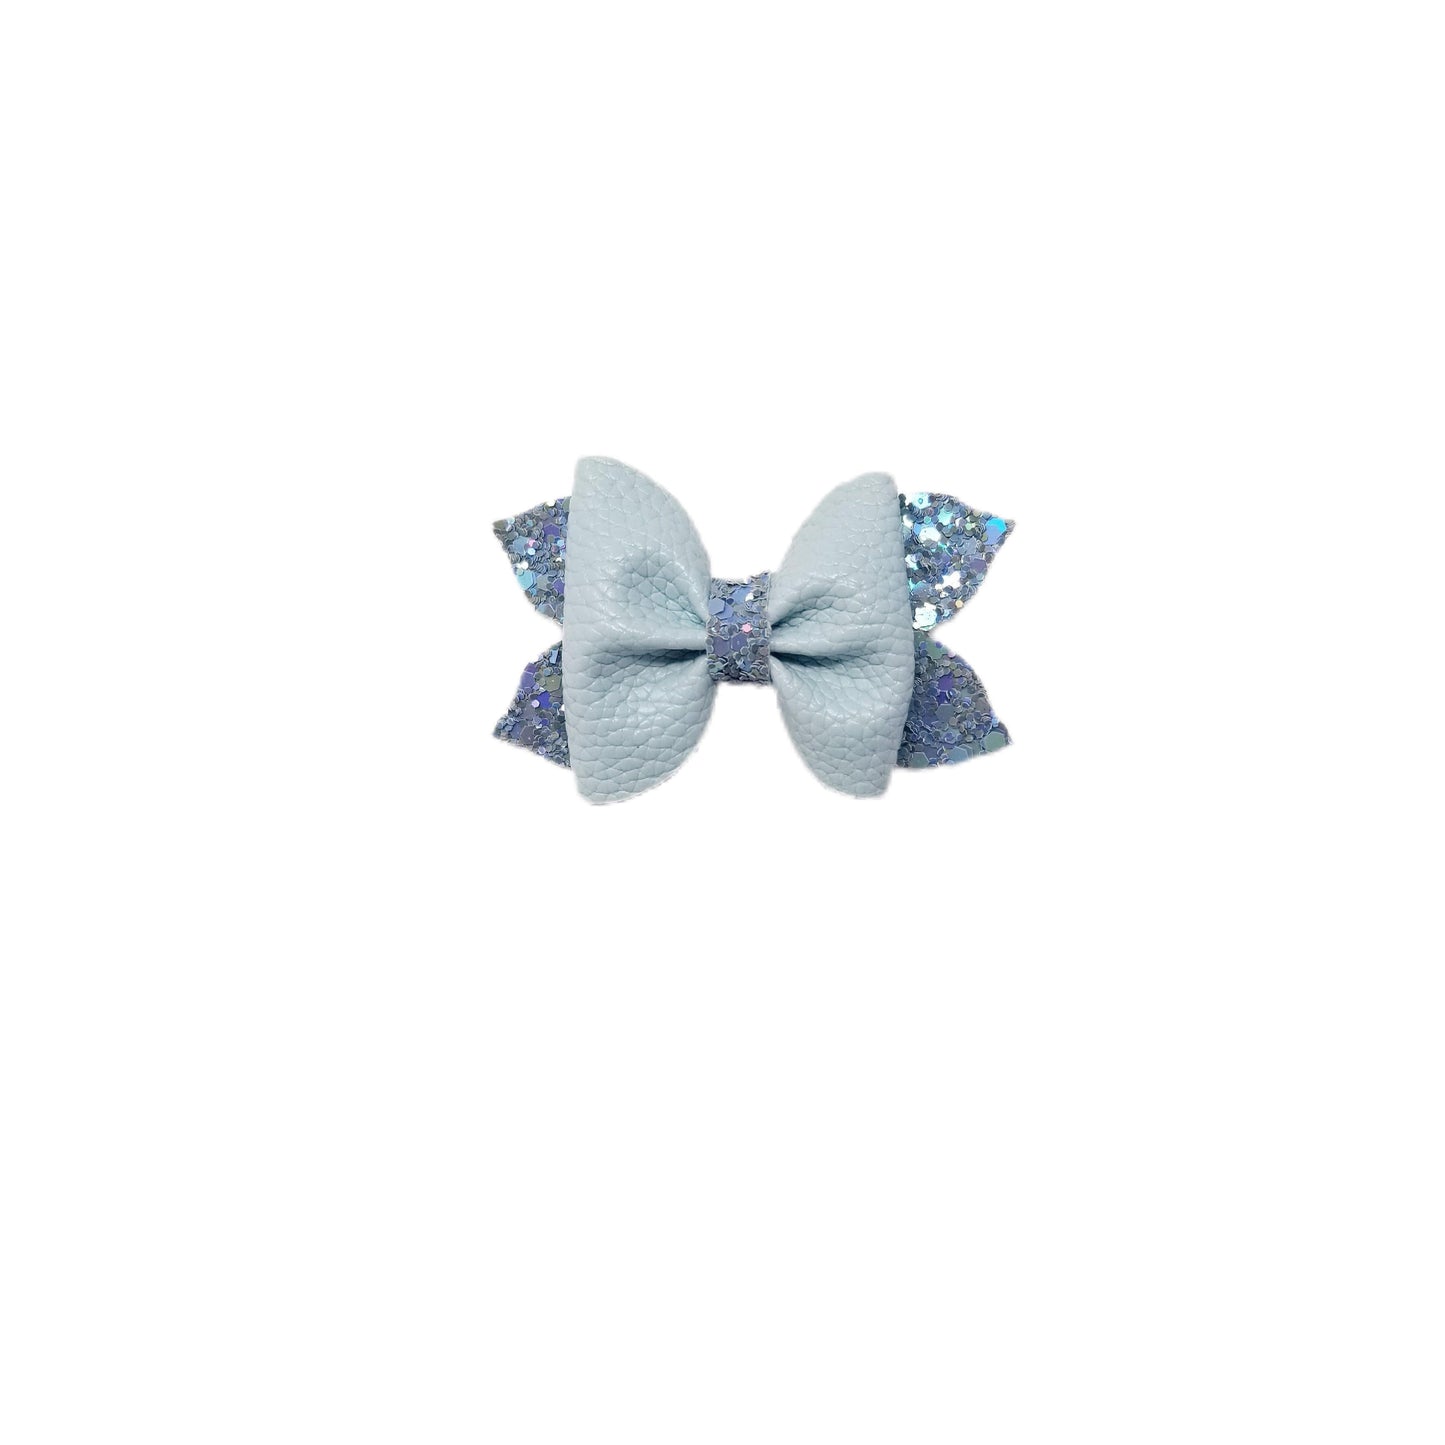 3 inch Blue Pixie Pinch Bow